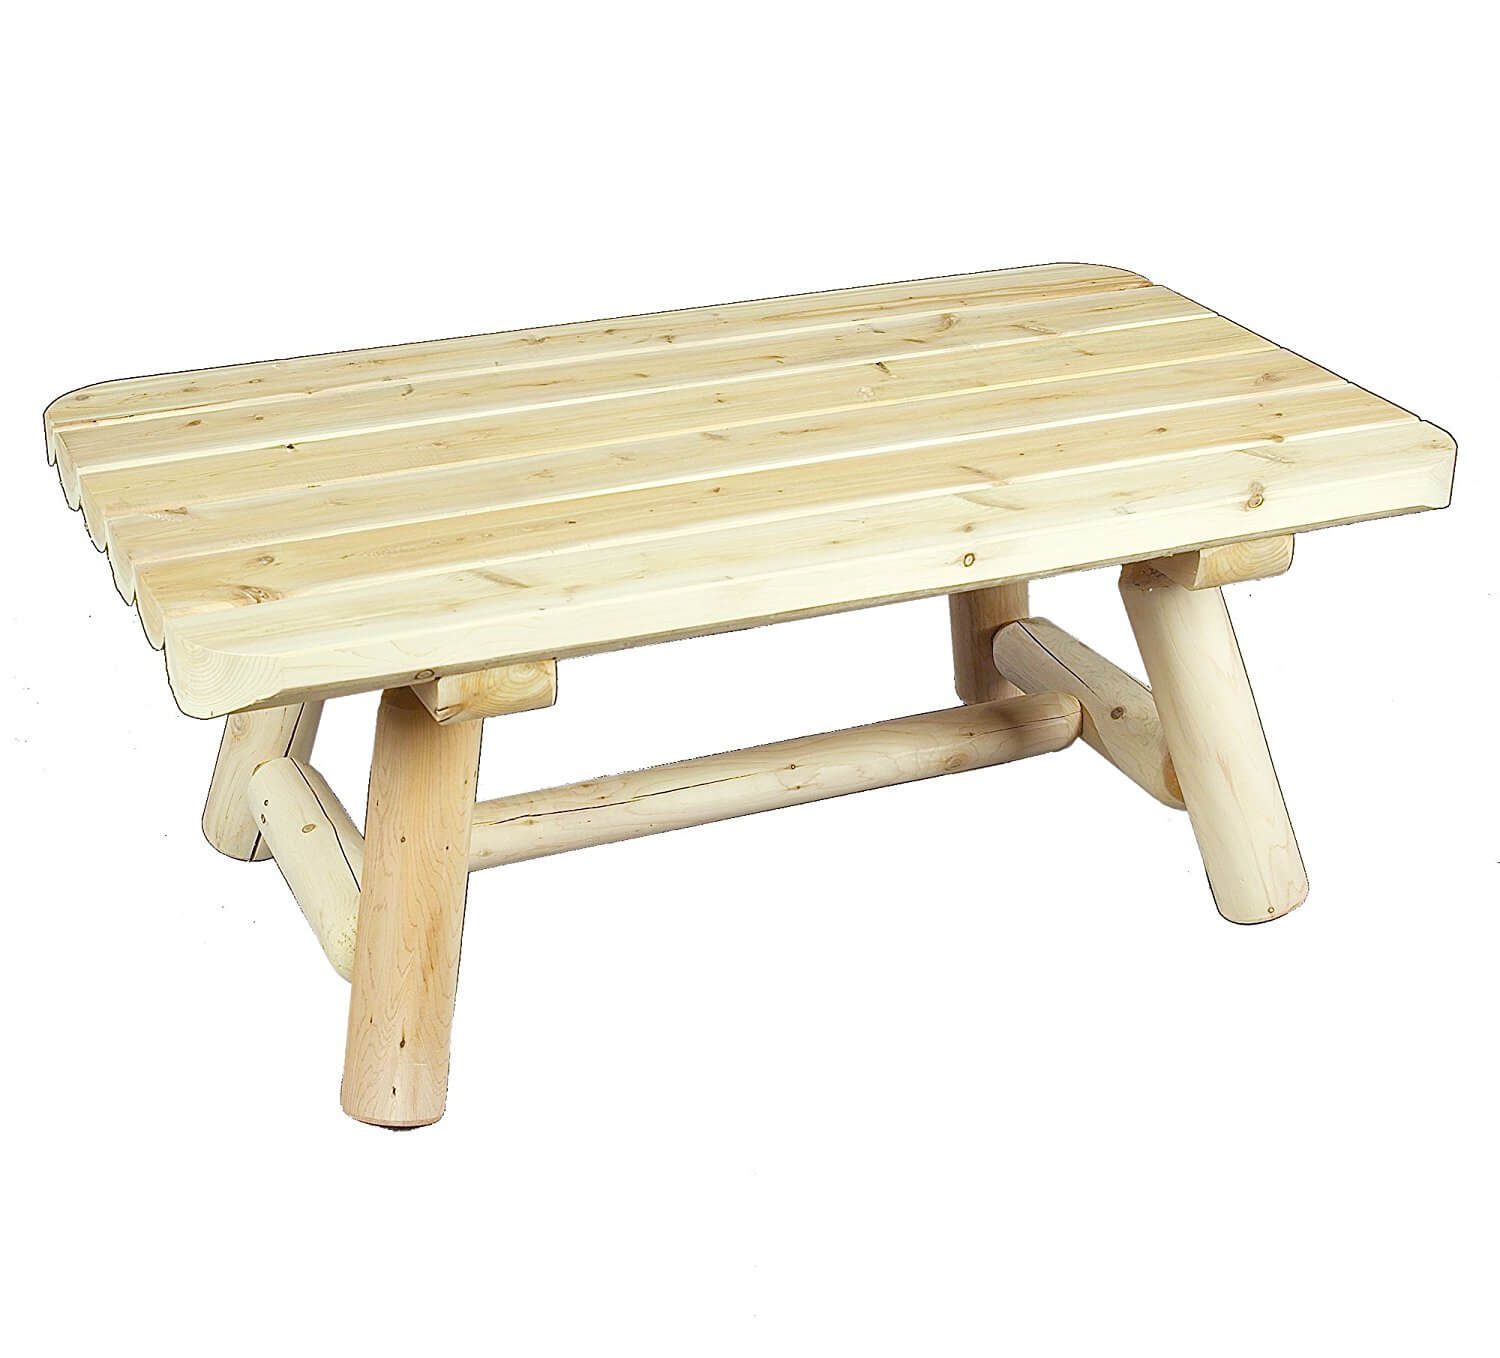 Flat-topped Cedar Log Coffee Table